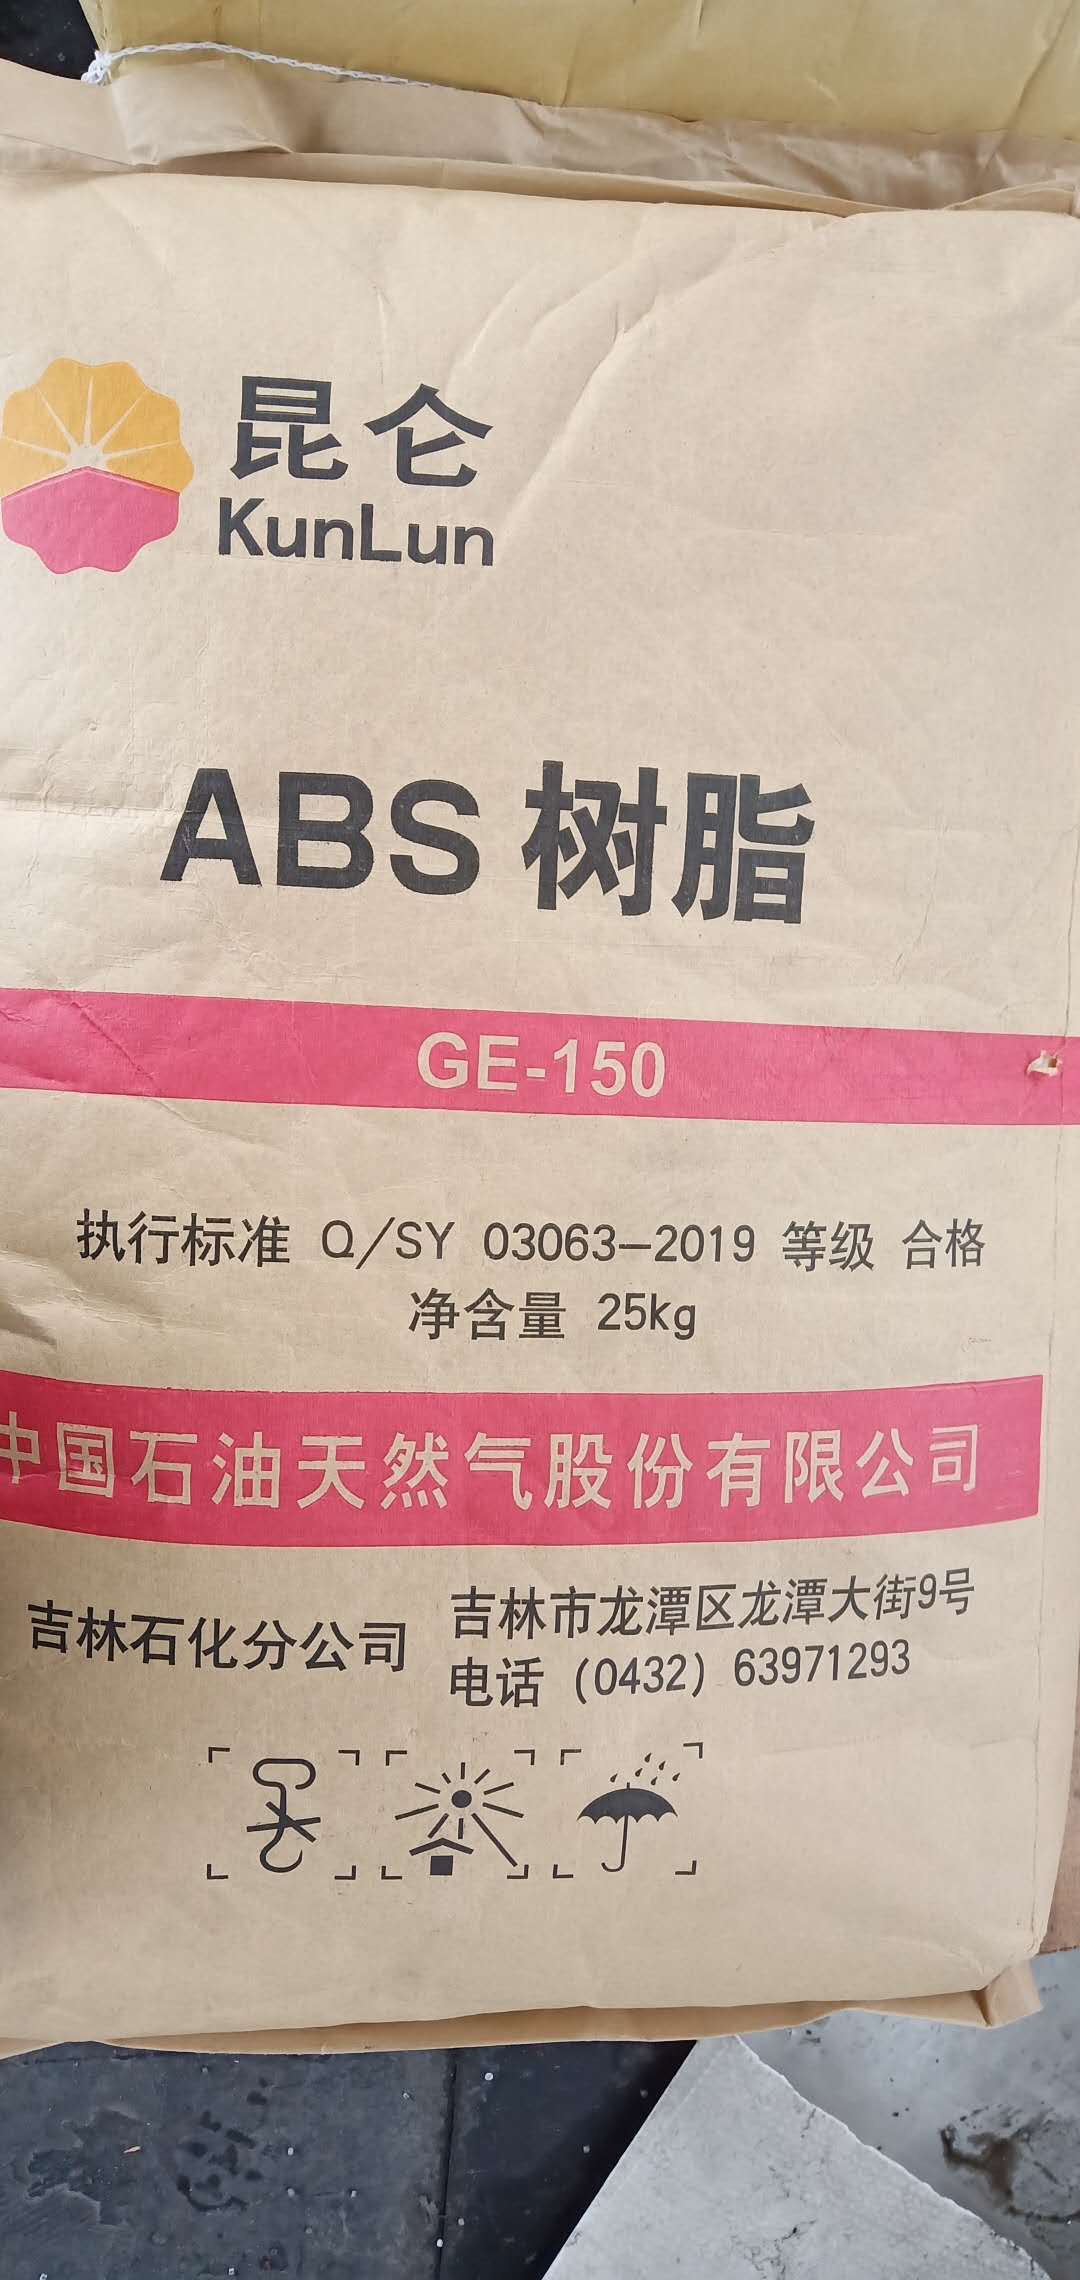 GE-150中石油吉林昆仑ABS树脂20217B-5详情图1